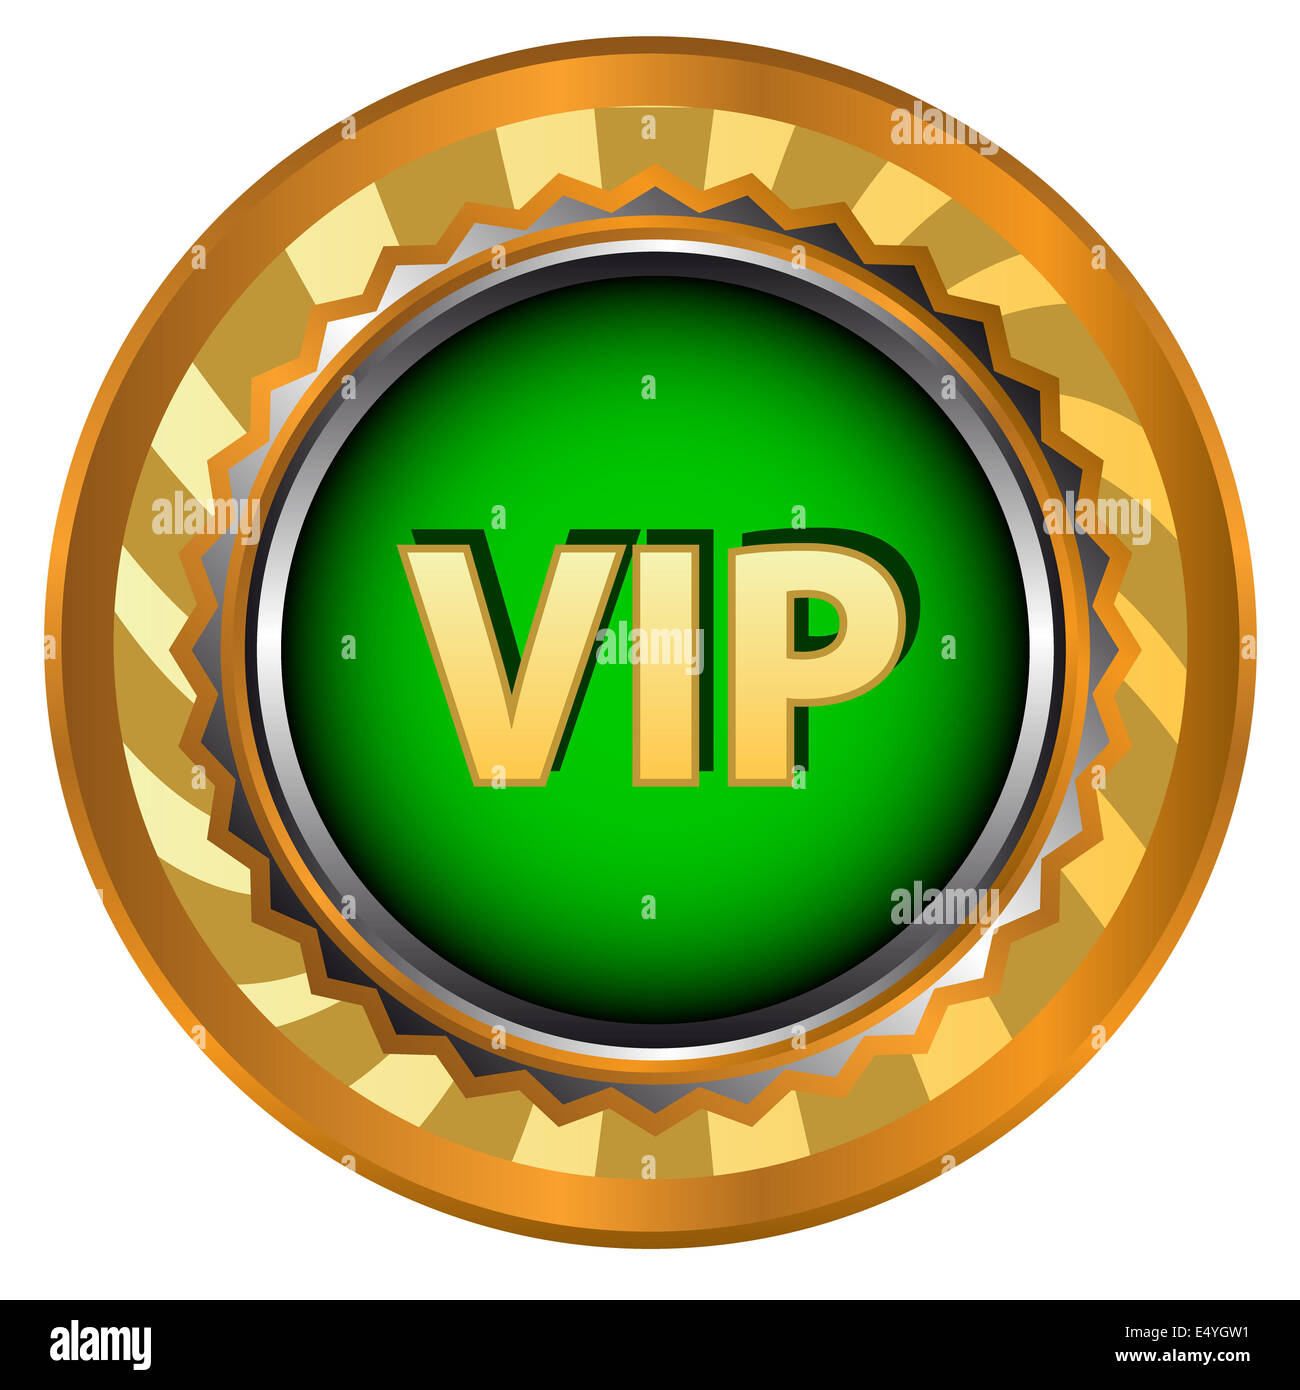 Vip logo Stock Photo